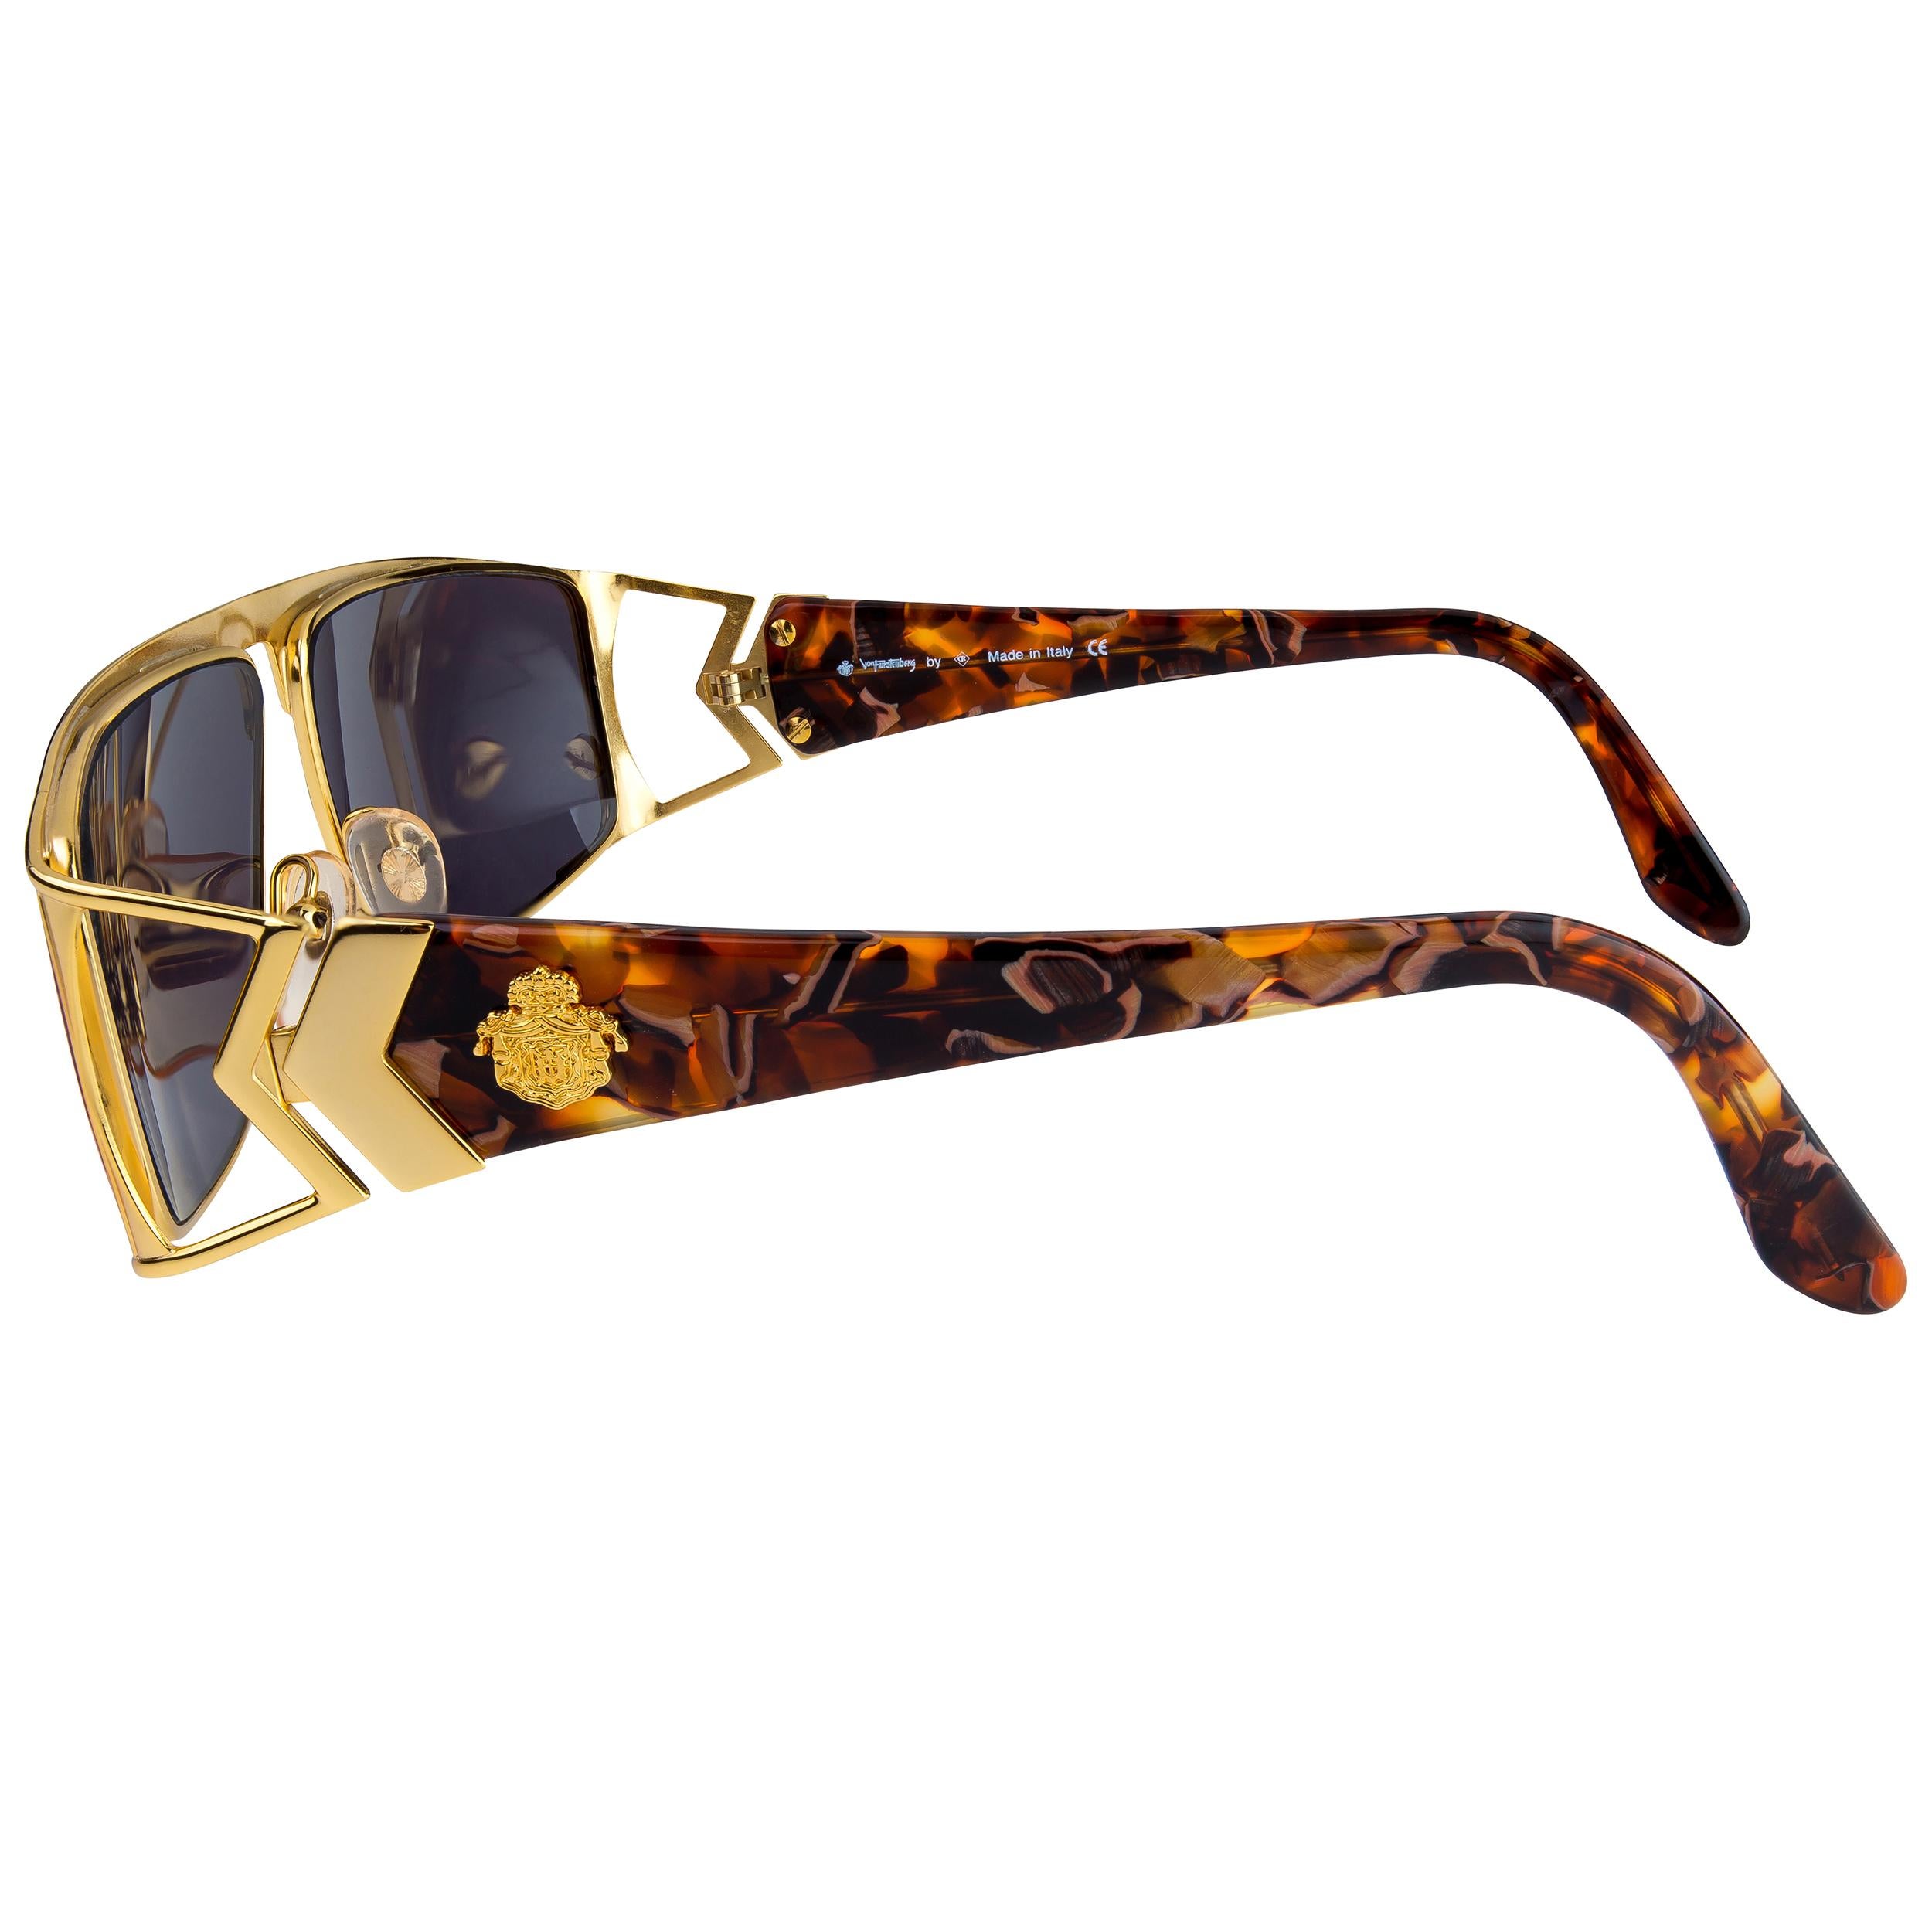 Black Von Furstenberg gold aviator sunglasses 80s For Sale